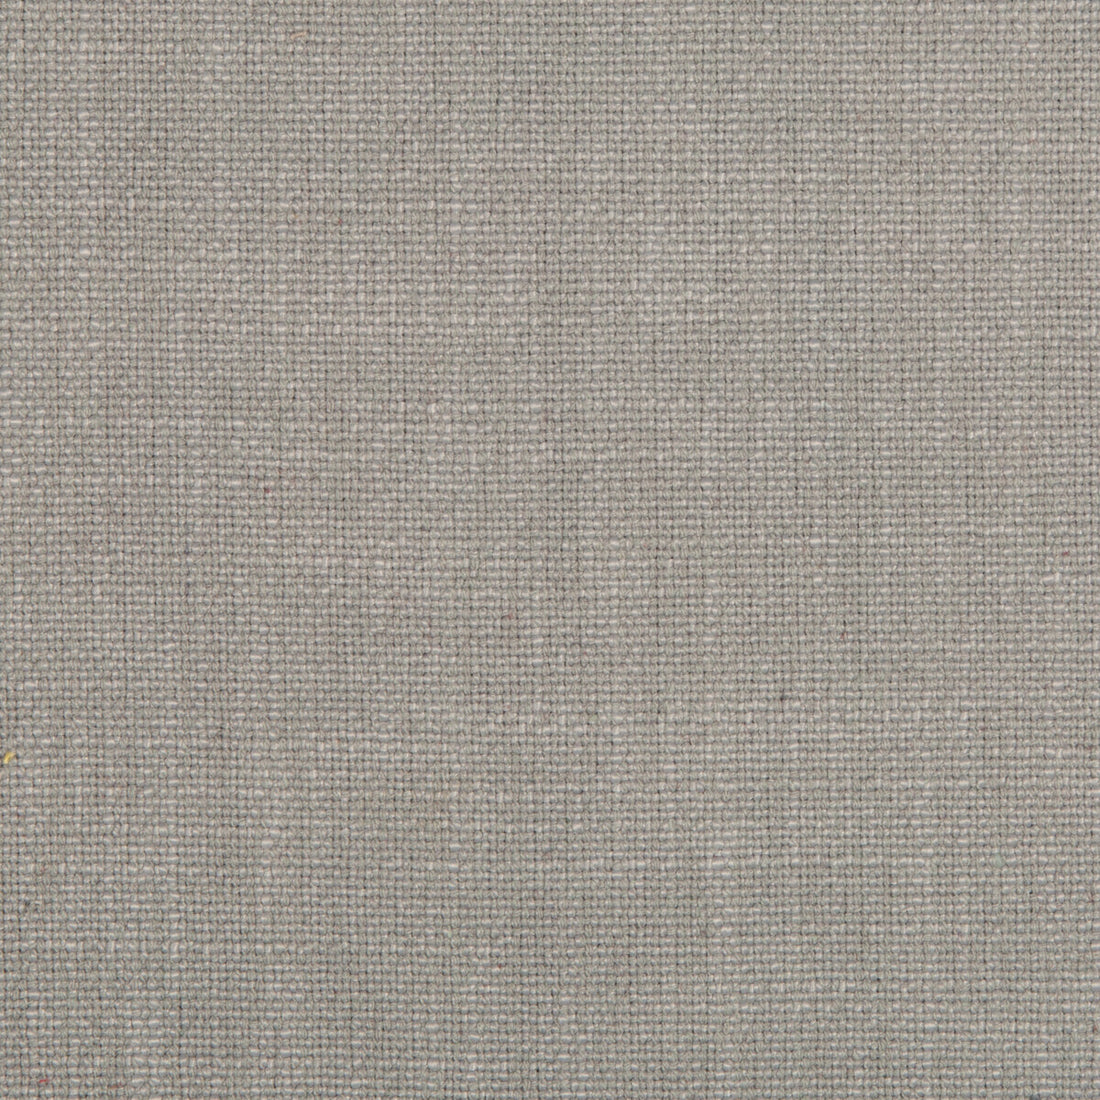 Kravet Smart fabric in 35226-11 color - pattern 35226.11.0 - by Kravet Smart in the Performance Kravetarmor collection